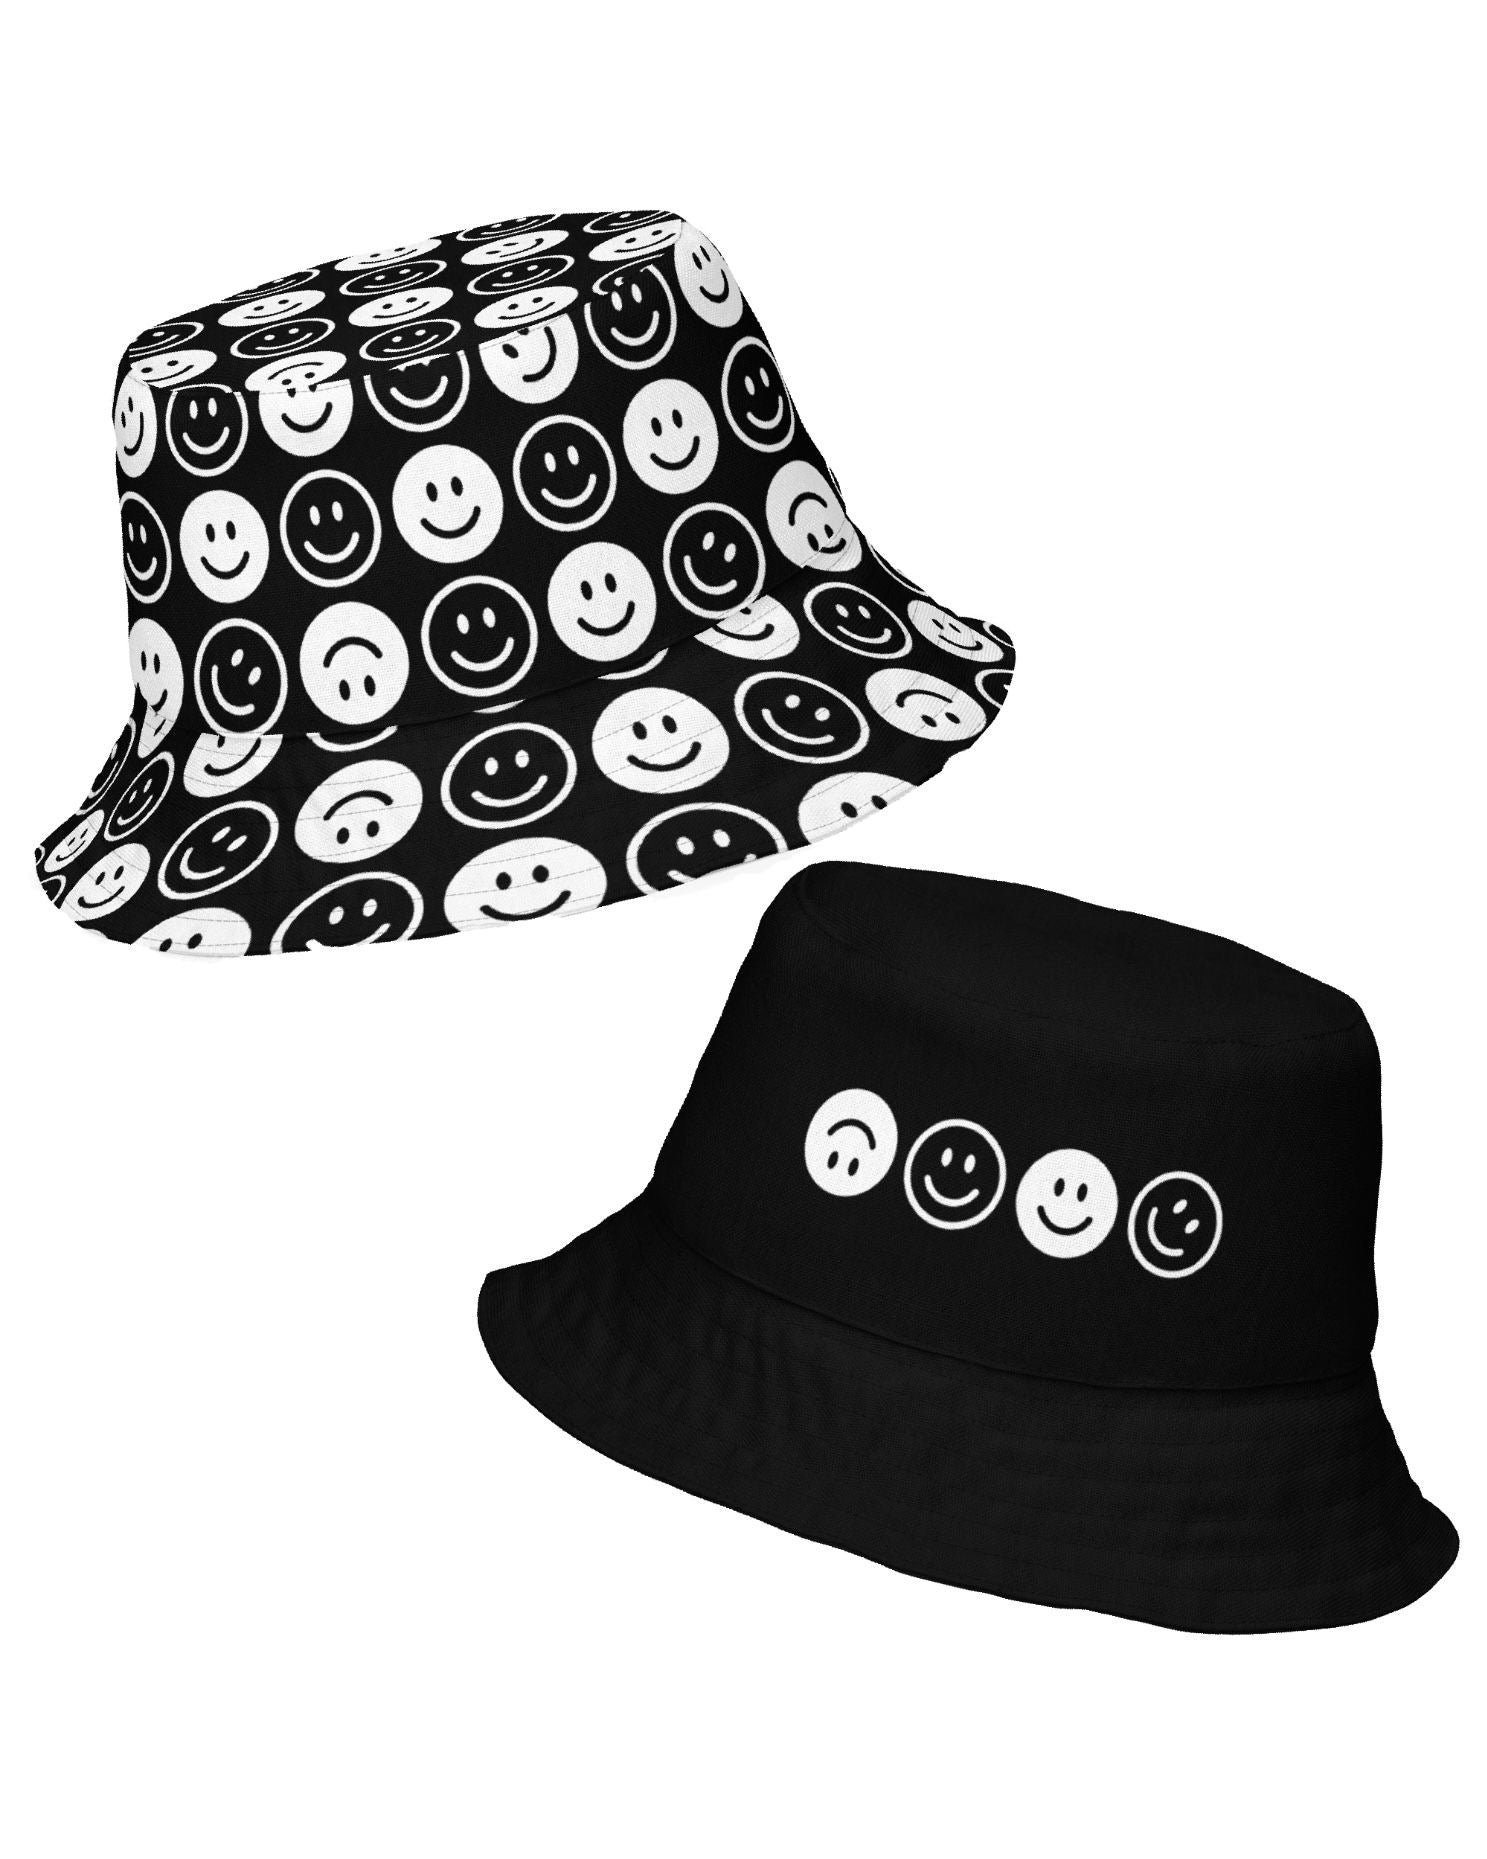 All Smiles Reversible Bucket Hat, Bucket Hat, - One Stop Rave